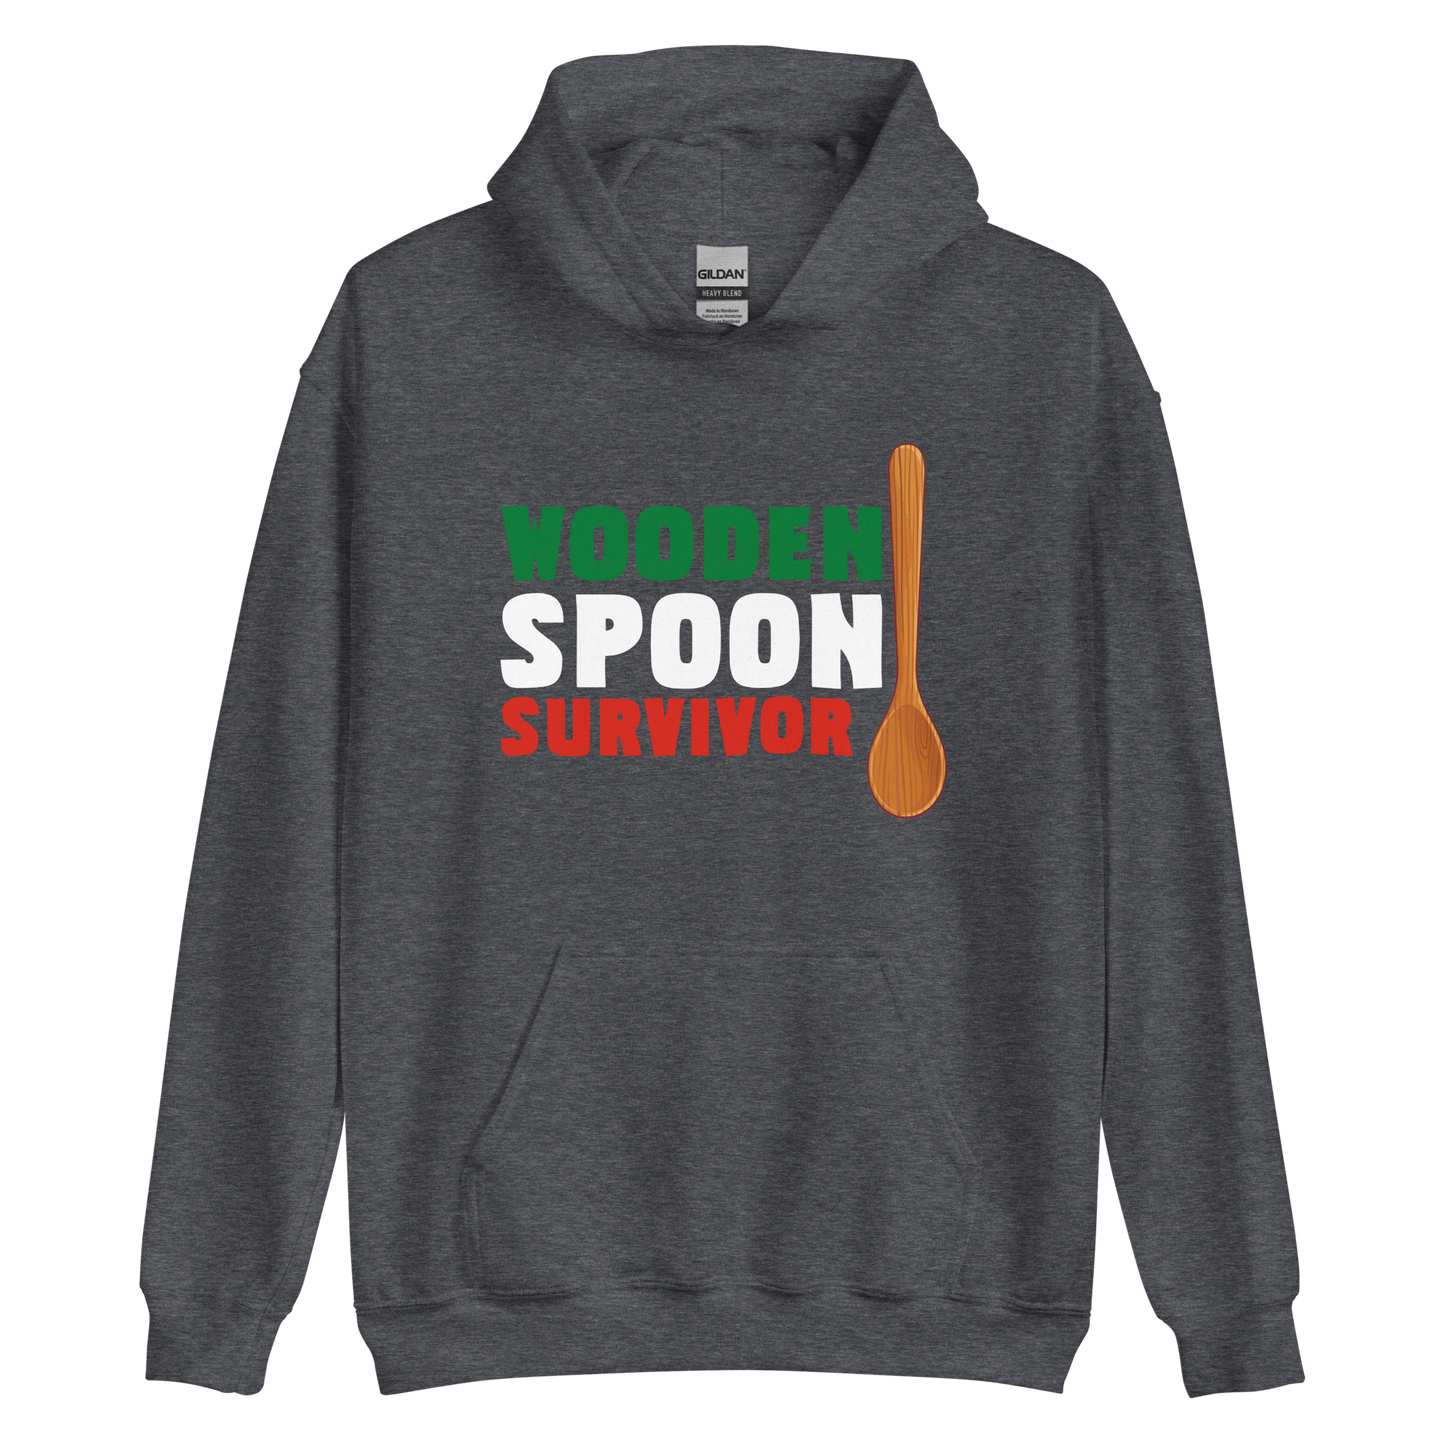 Wooden Spoon Survivor Humor Italian Hoodie Embrace the Culinary Adventures- Vintage Hoodie for Italians